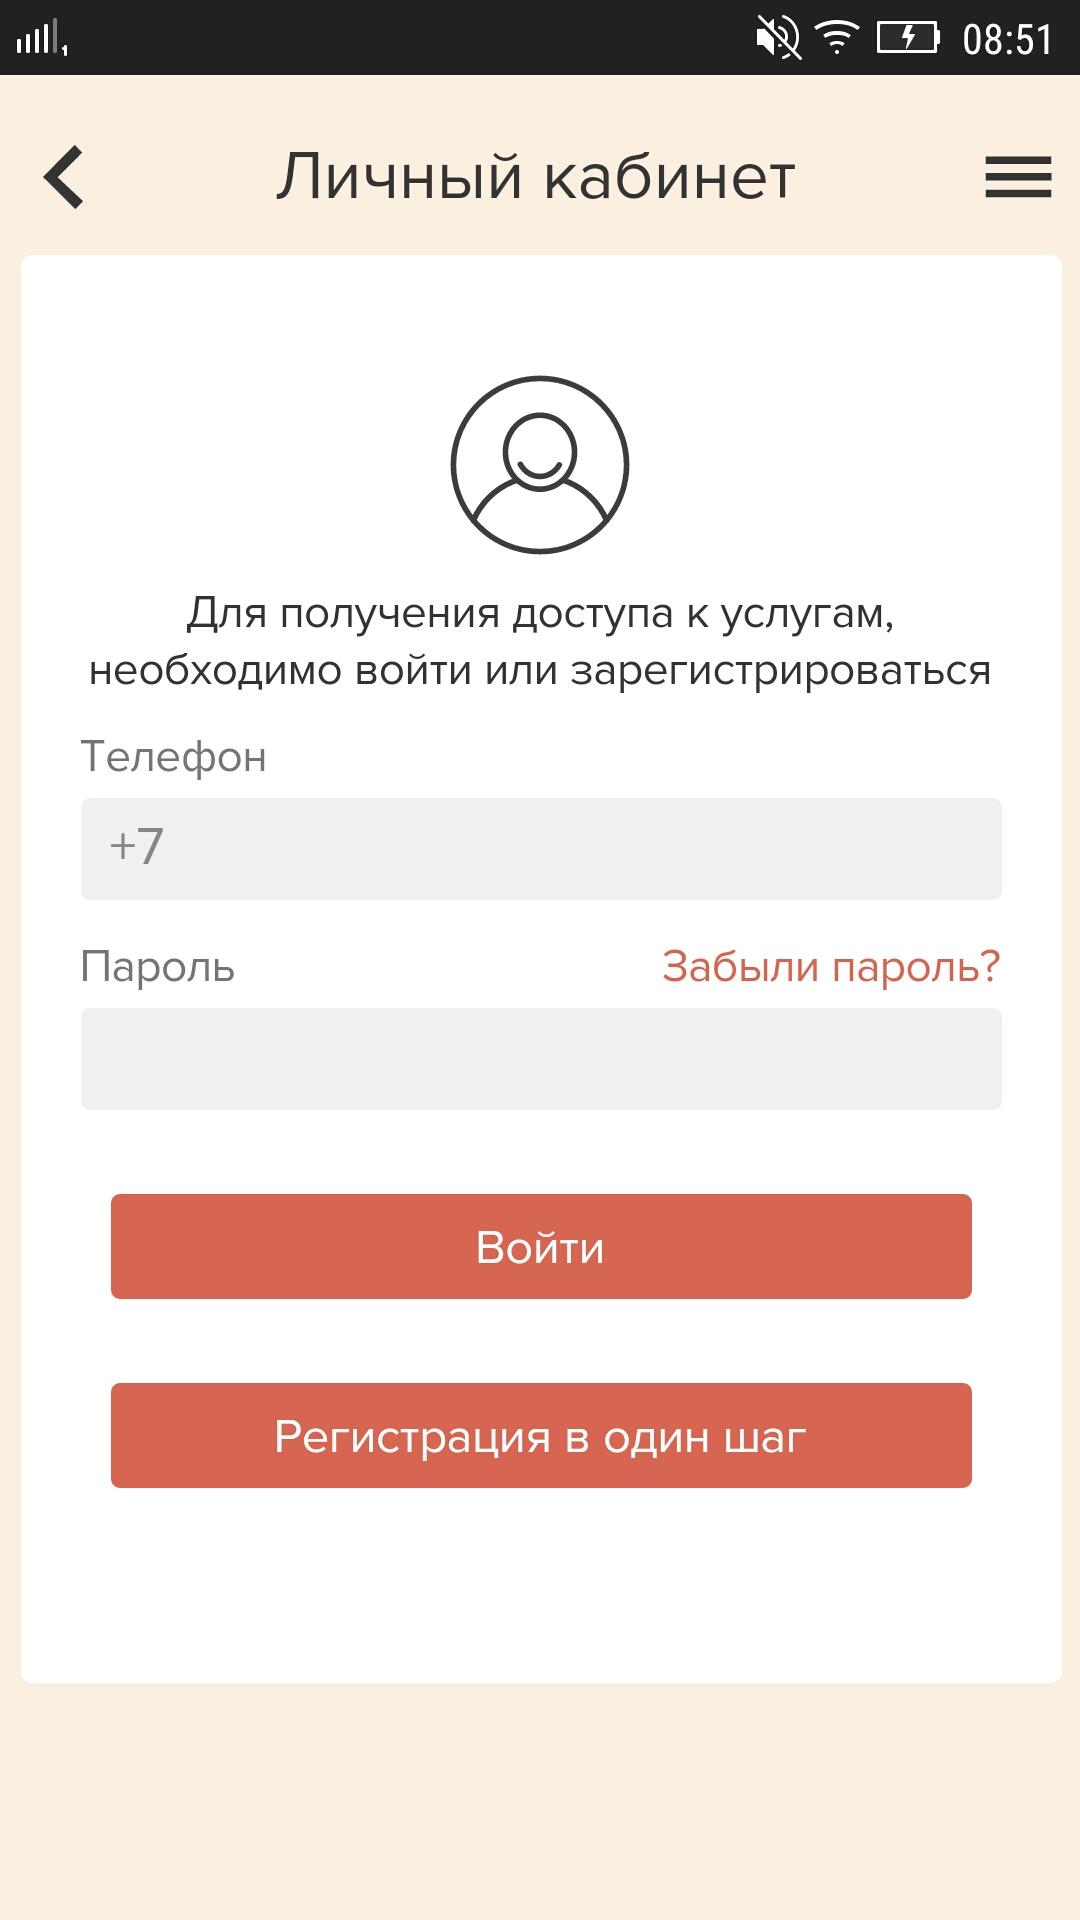 Android application Услуги РТ screenshort